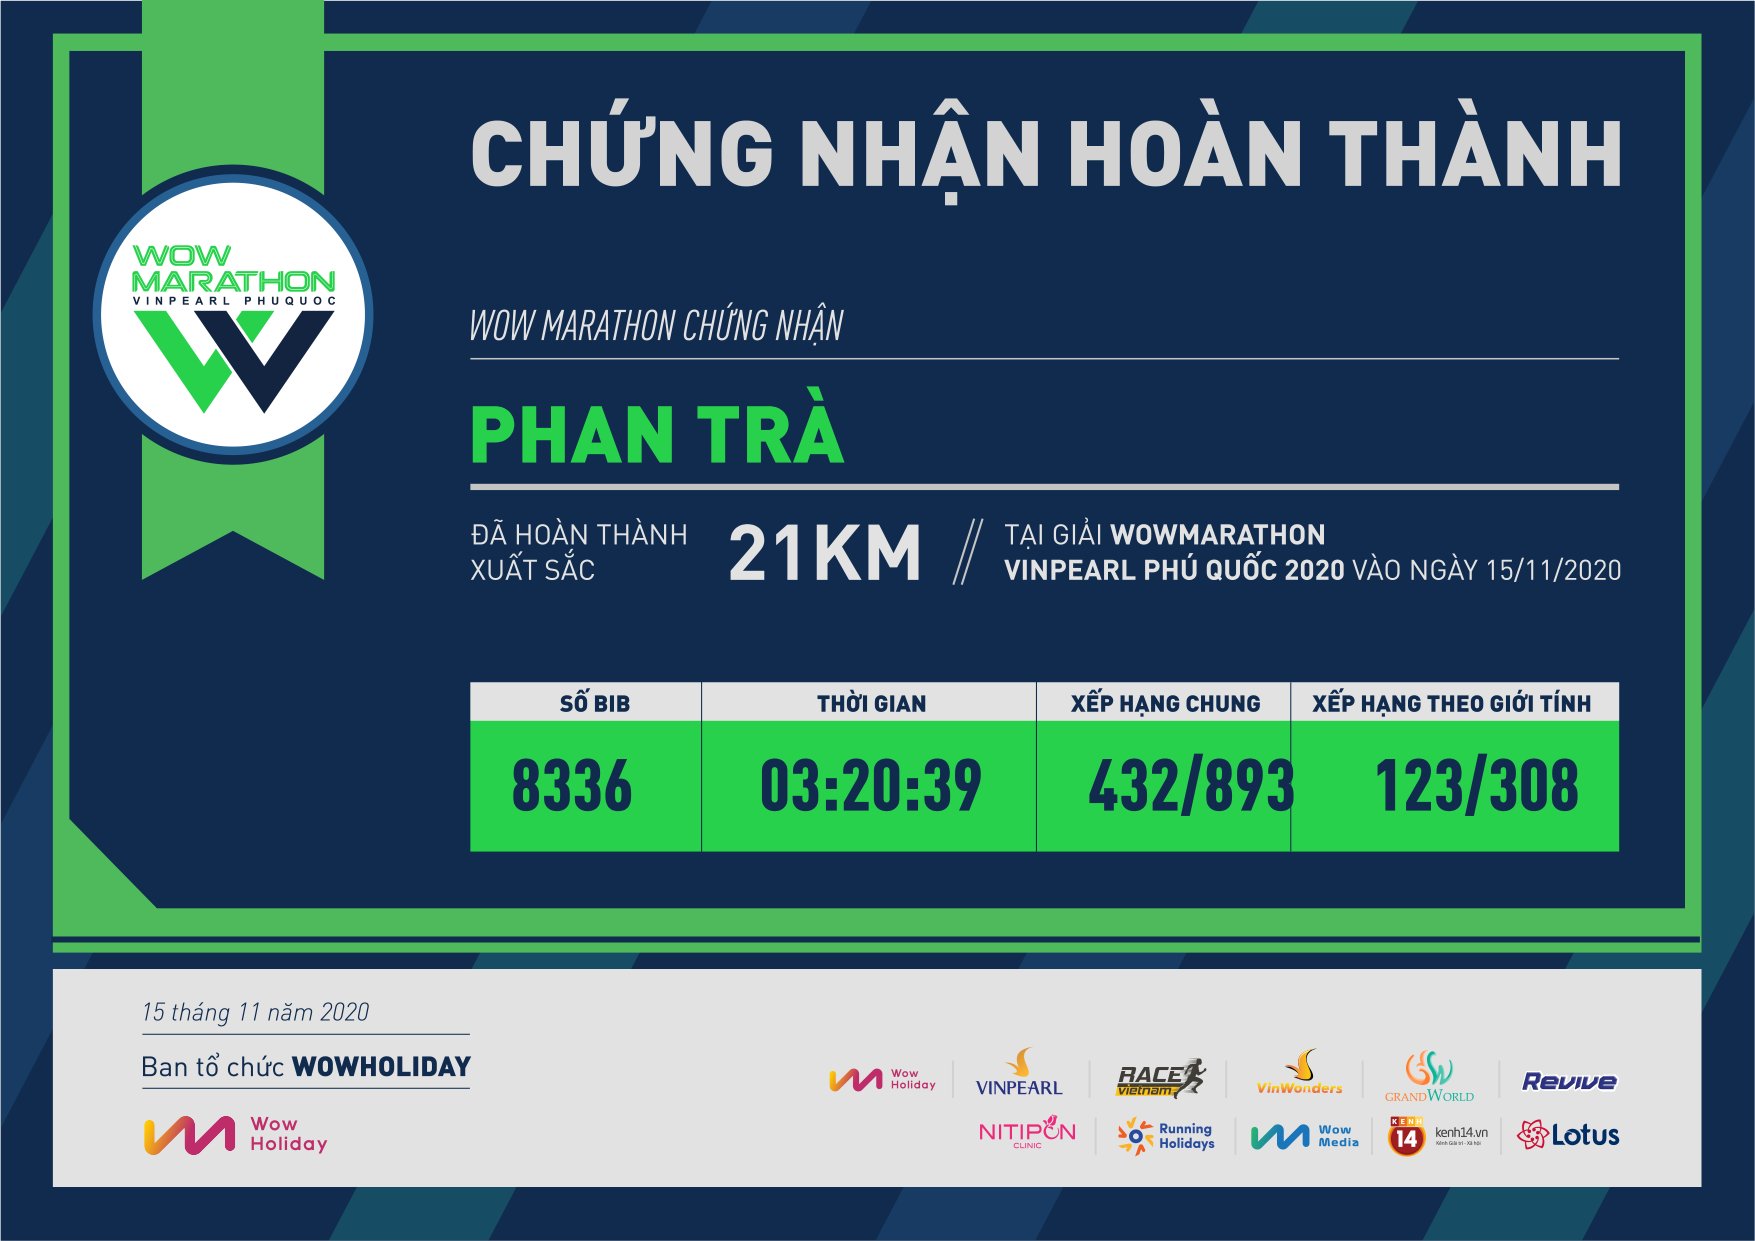 8336 - Phan Thị Trà